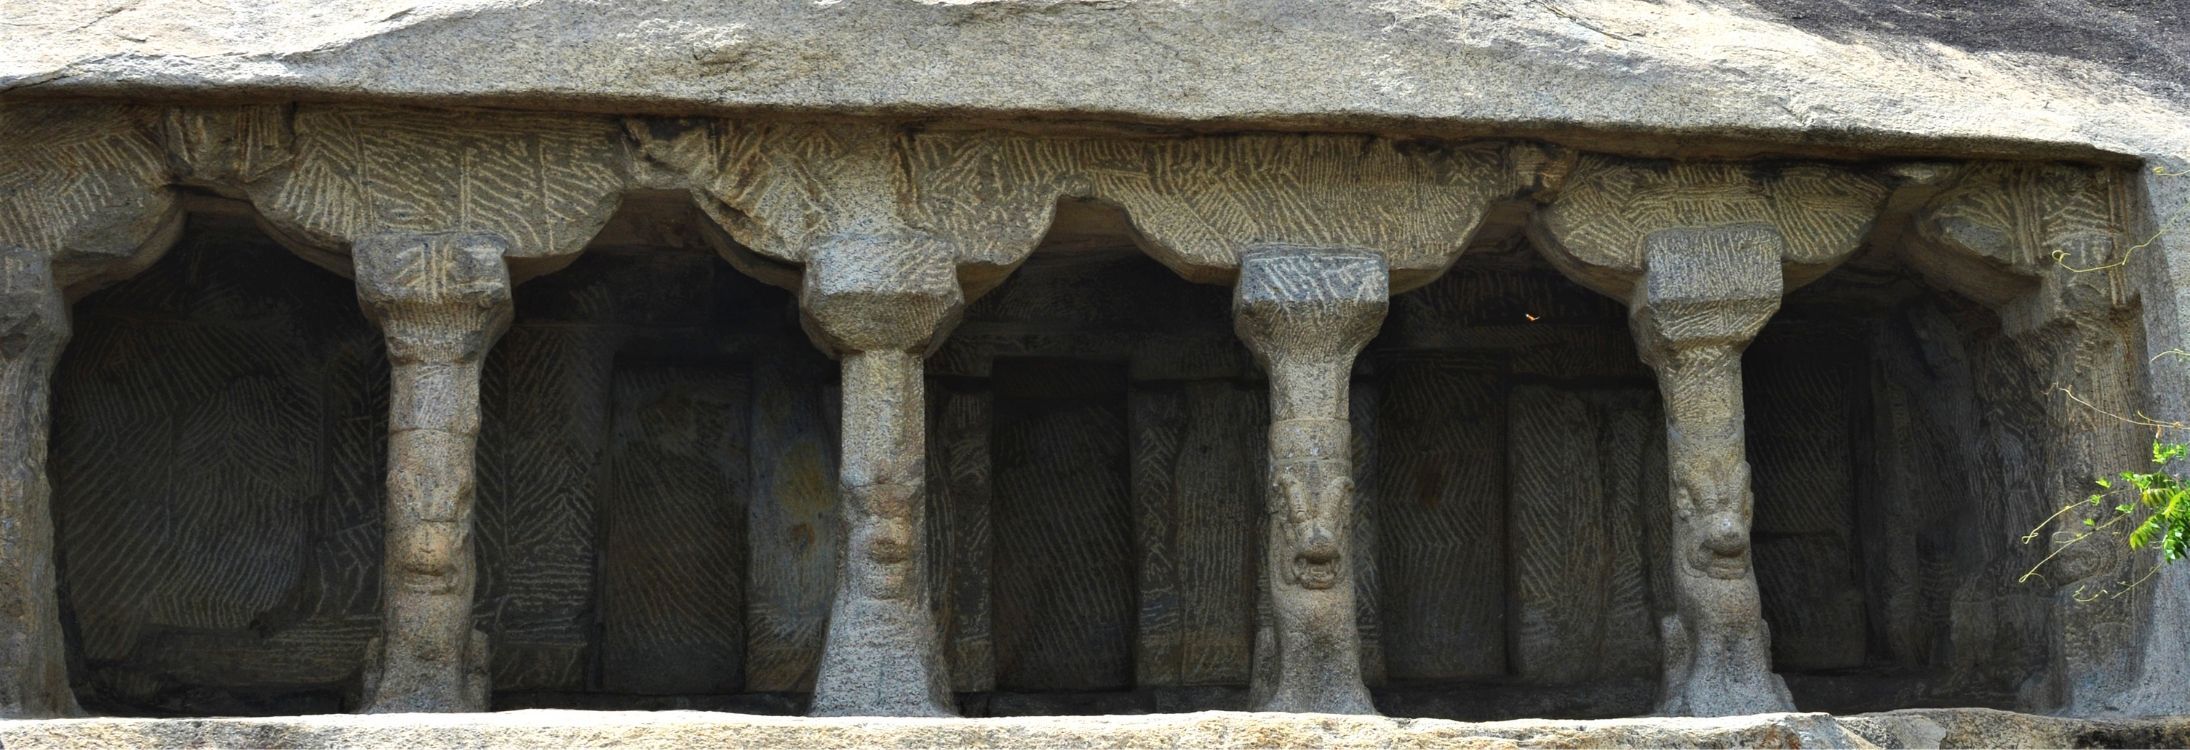 Krishna Cave Temple